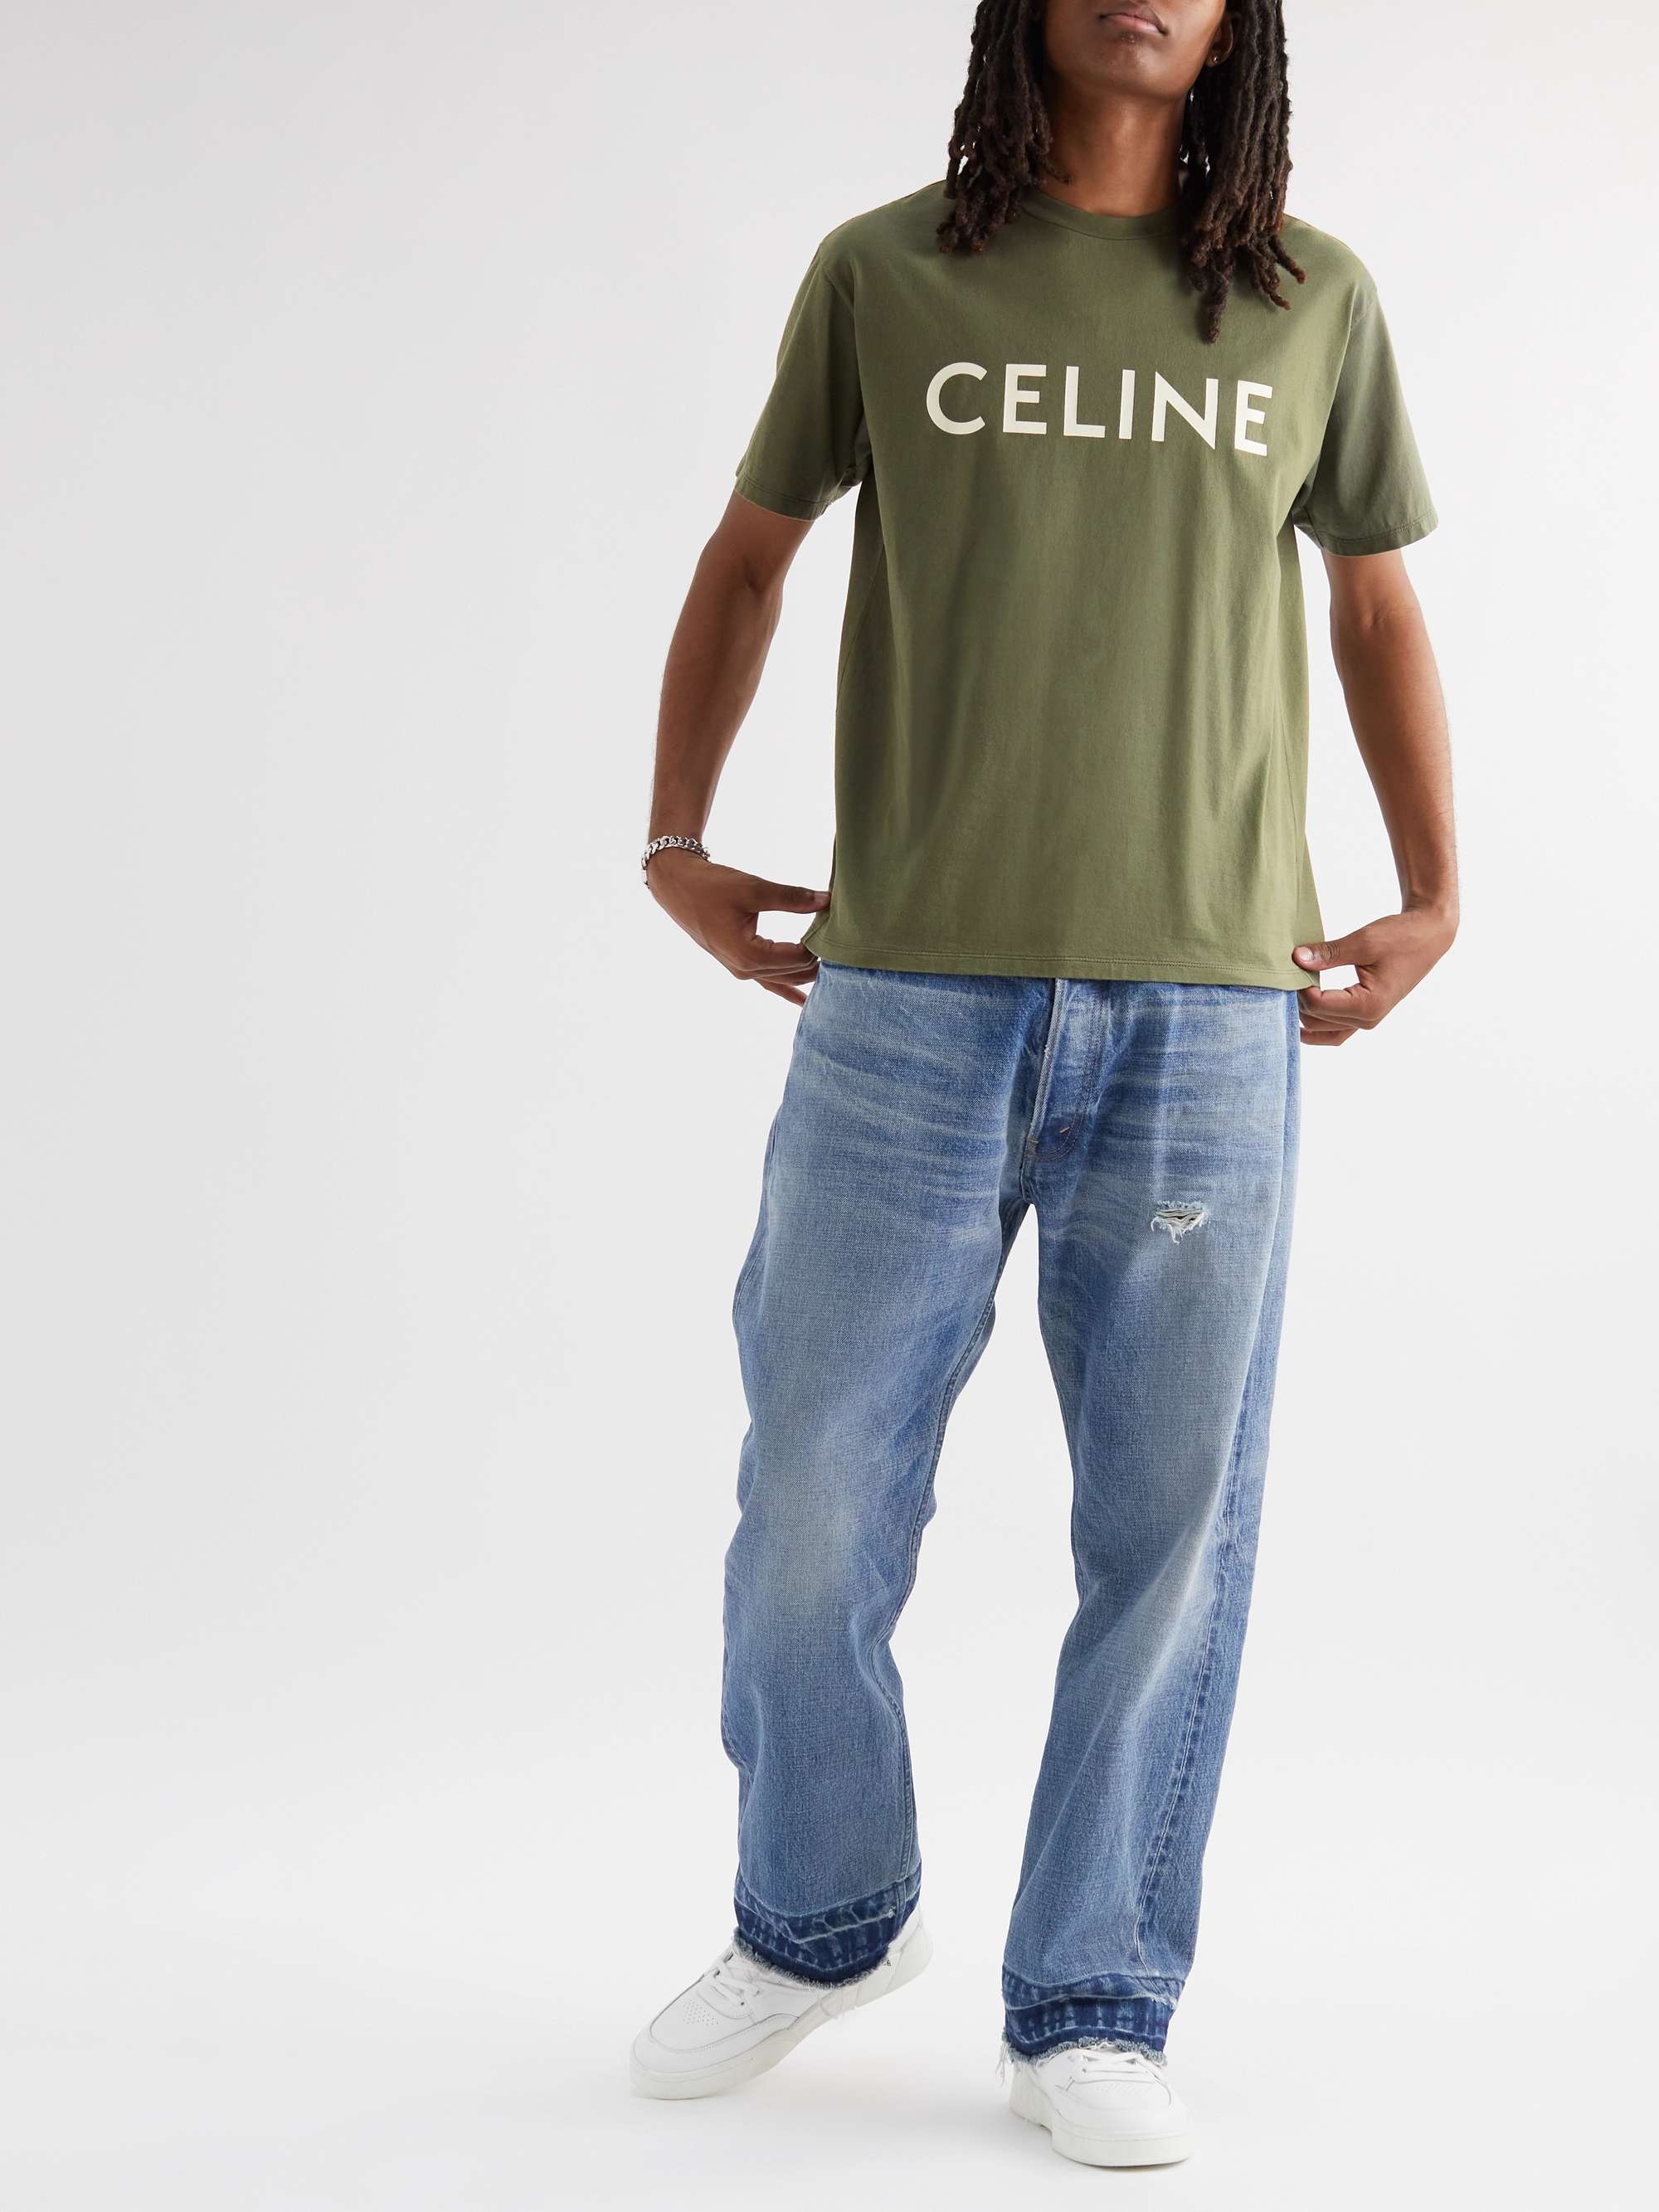 CELINE HOMME Logo-Print Cotton-Jersey T-Shirt | MR PORTER